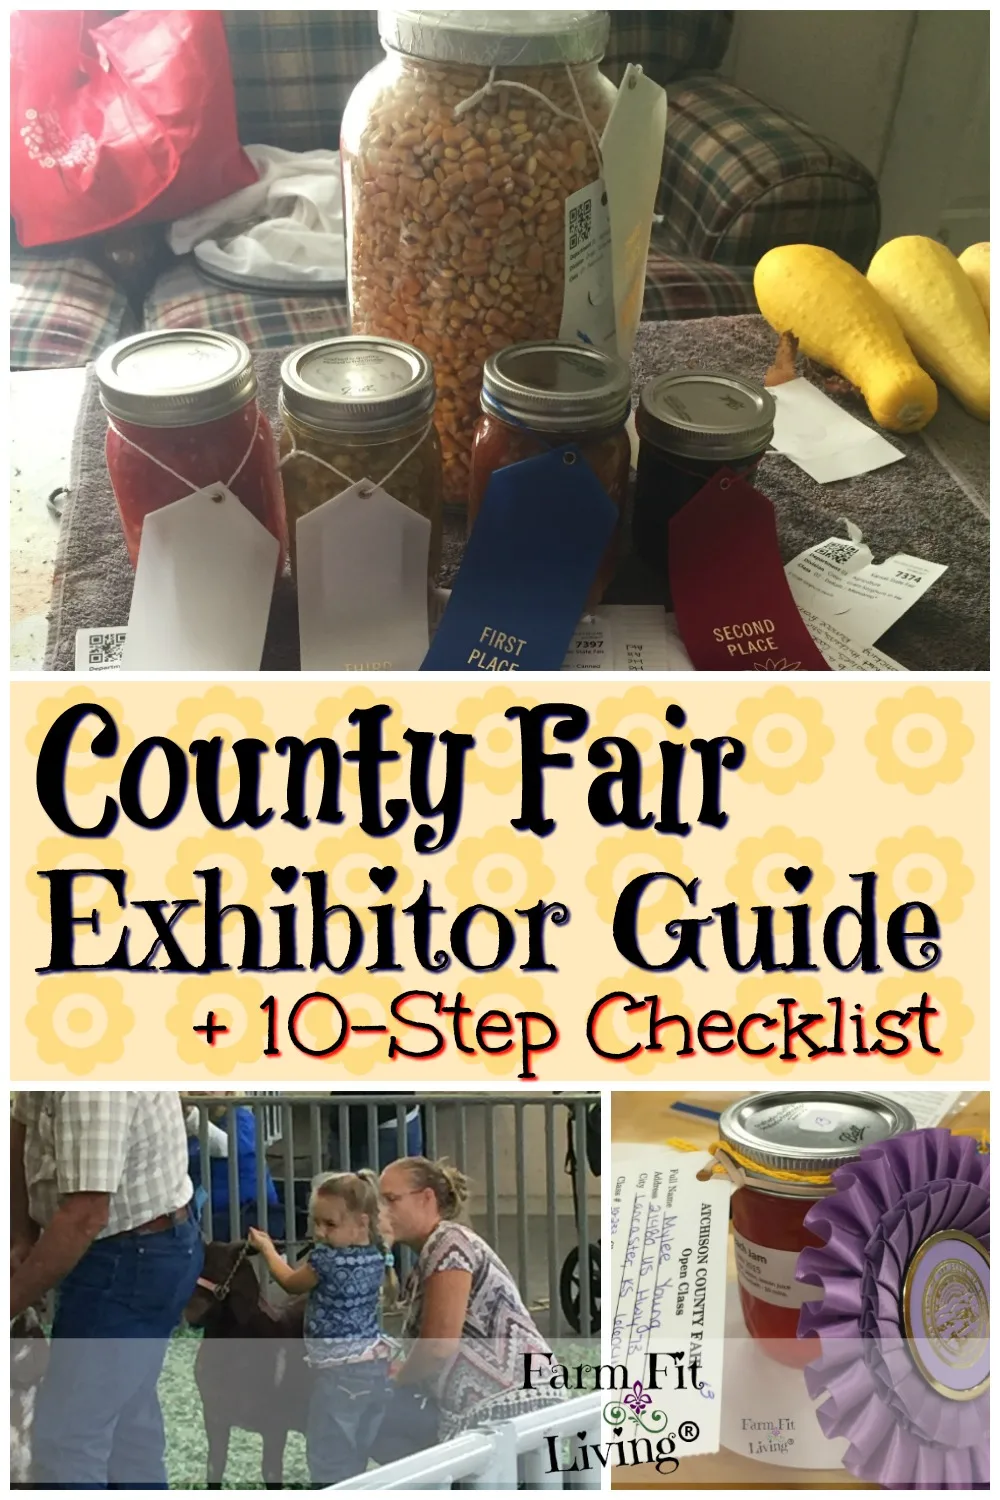 County Fair Exhibitor Guide